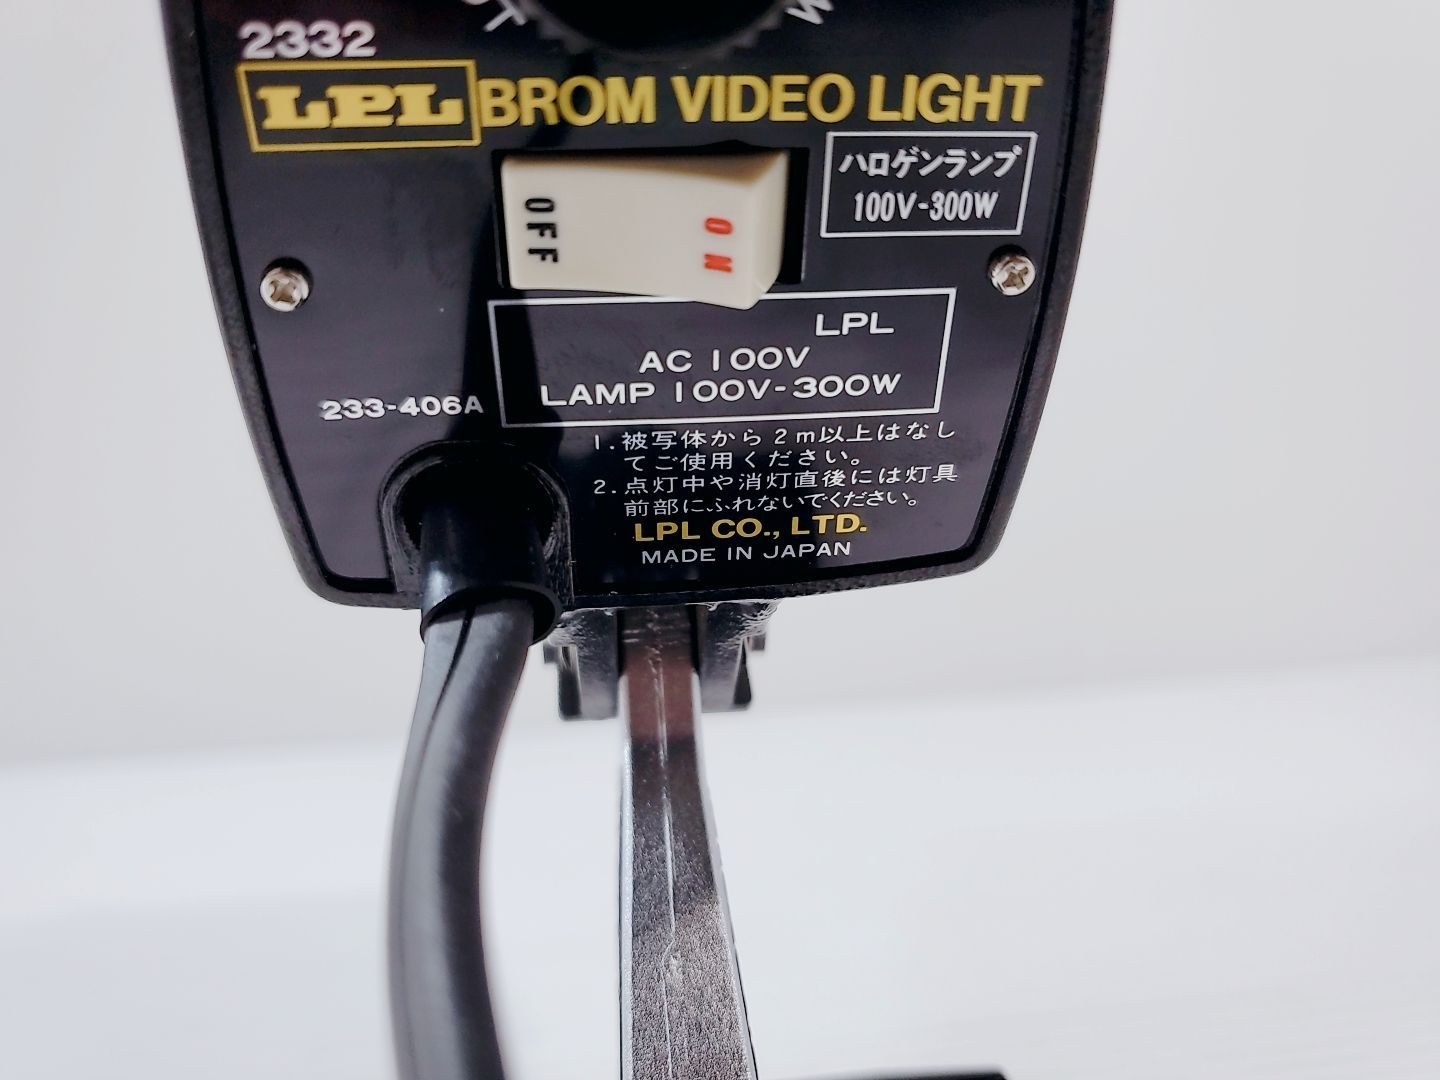 LPL ビデオライト レトロ ブロムビデオライト 300Wタイプ L2332